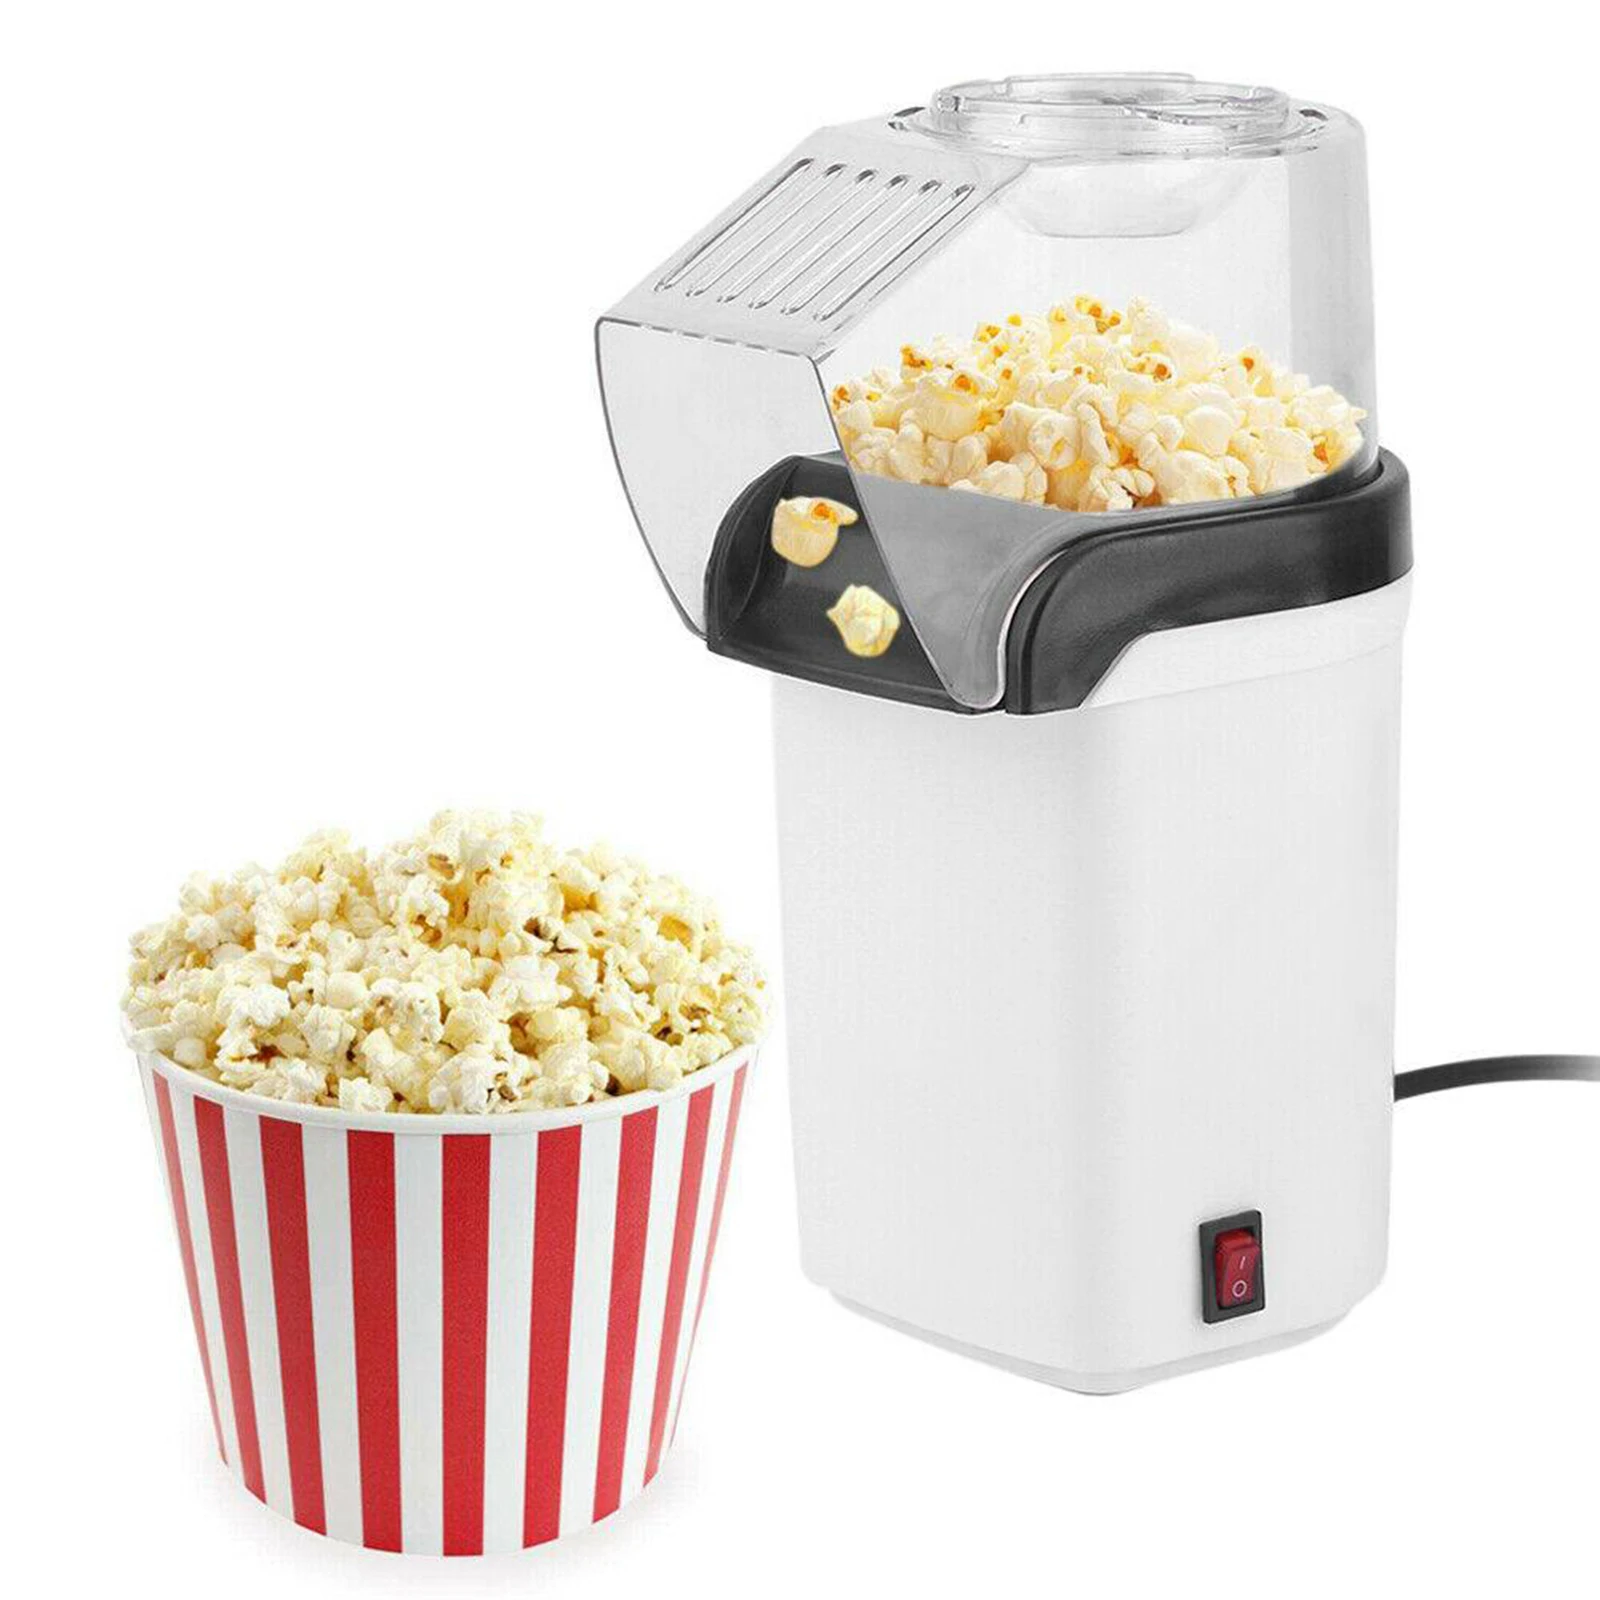 Air Popcorn Popper Maker, Electric Hot Air Popcorn Machine-1200W, Oil-Free for Home